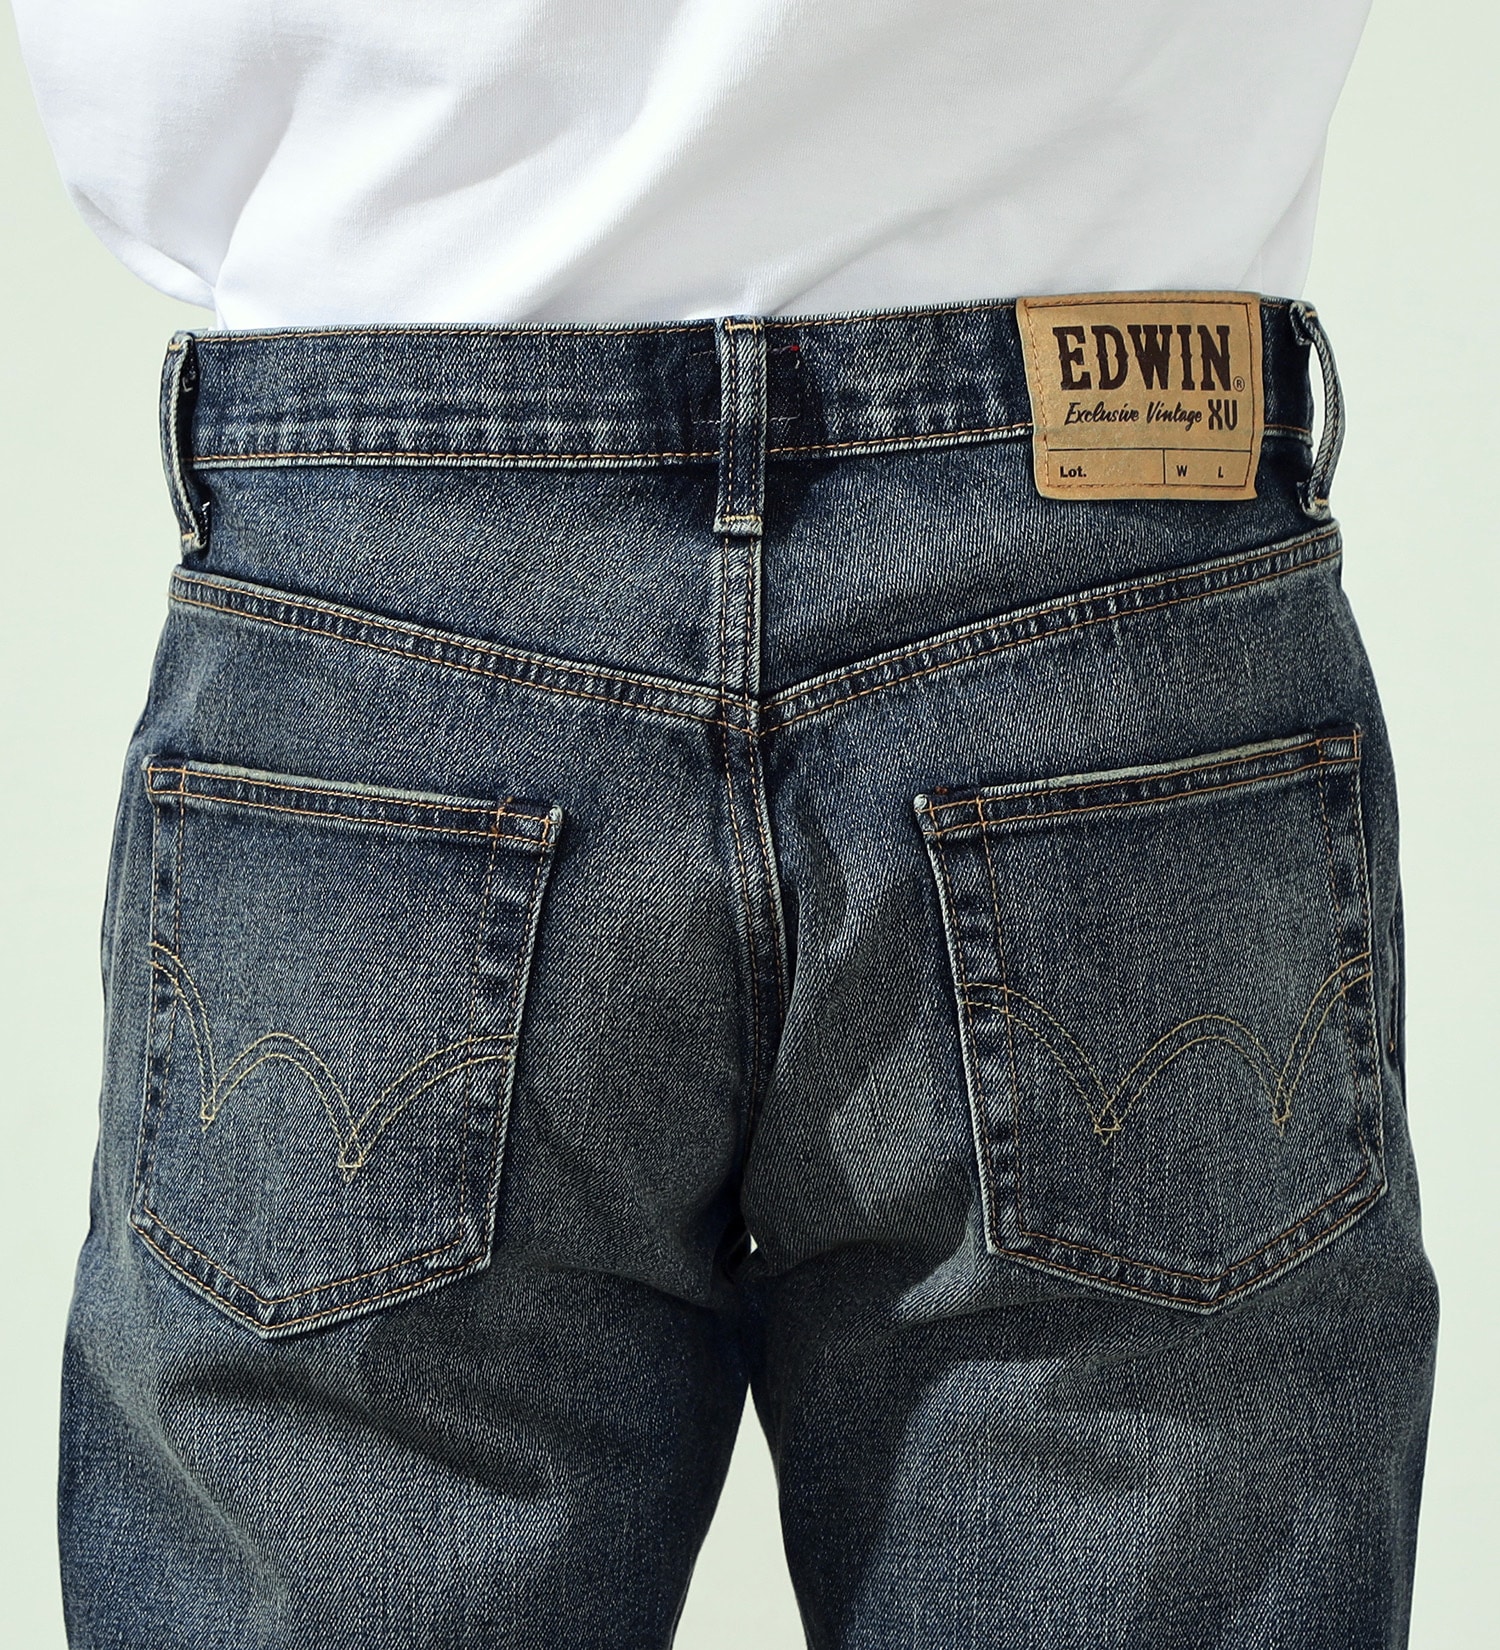 EDWIN(エドウイン)の【試着対象】XV レギュラーストレートデニムパンツ|パンツ/デニムパンツ/メンズ|中色ブルー